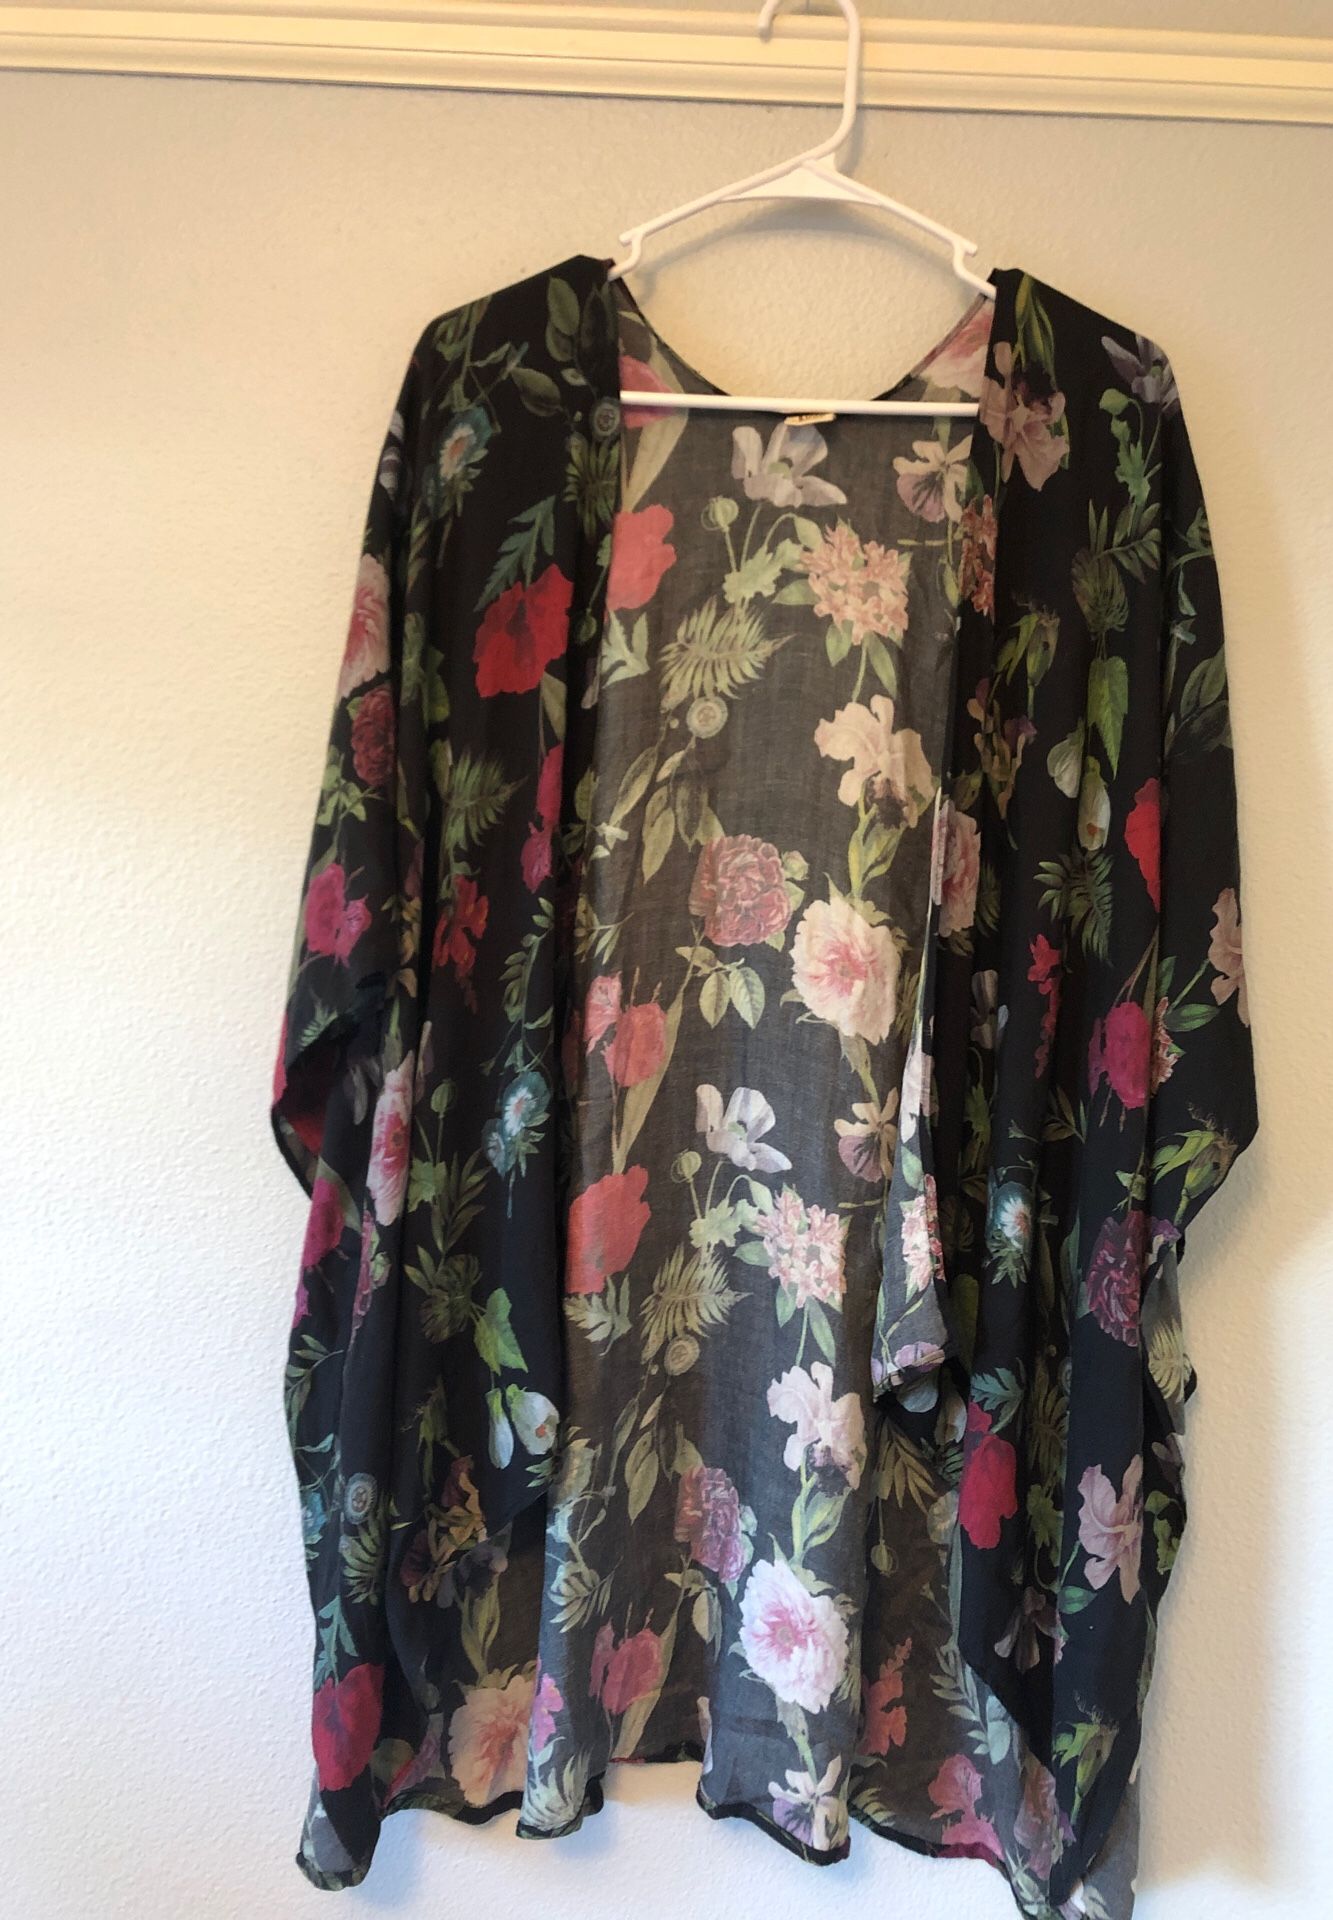 Secko Multi-way shawl In dark floral one size fits all